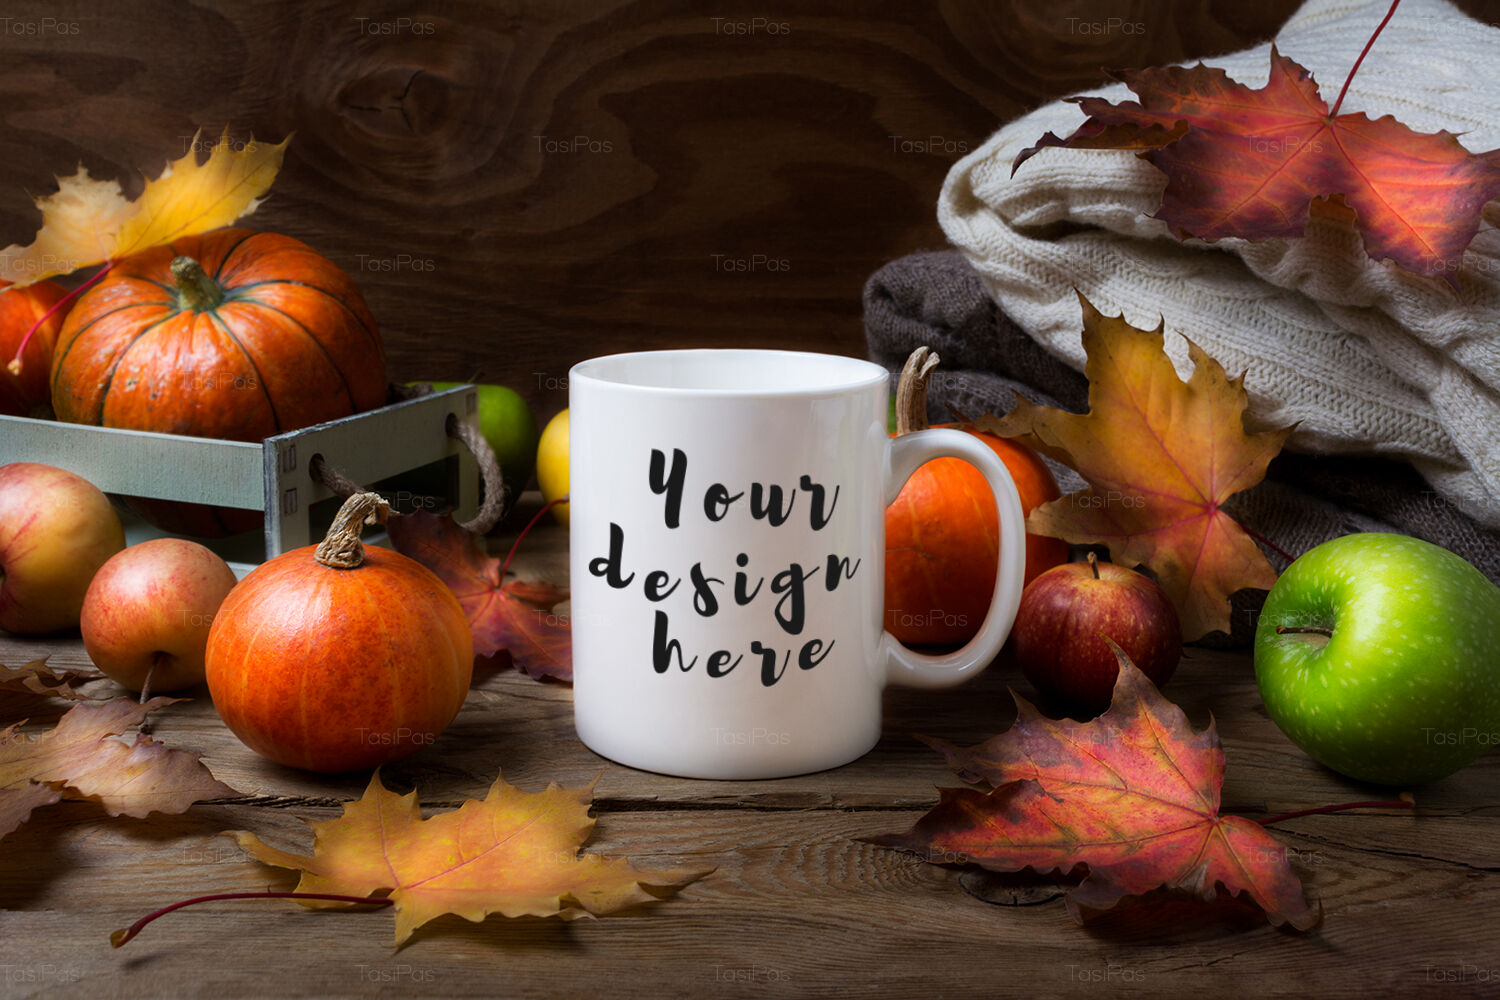 Download White coffee mug mockup with fall leaves, pumpkins By TasiPas | TheHungryJPEG.com